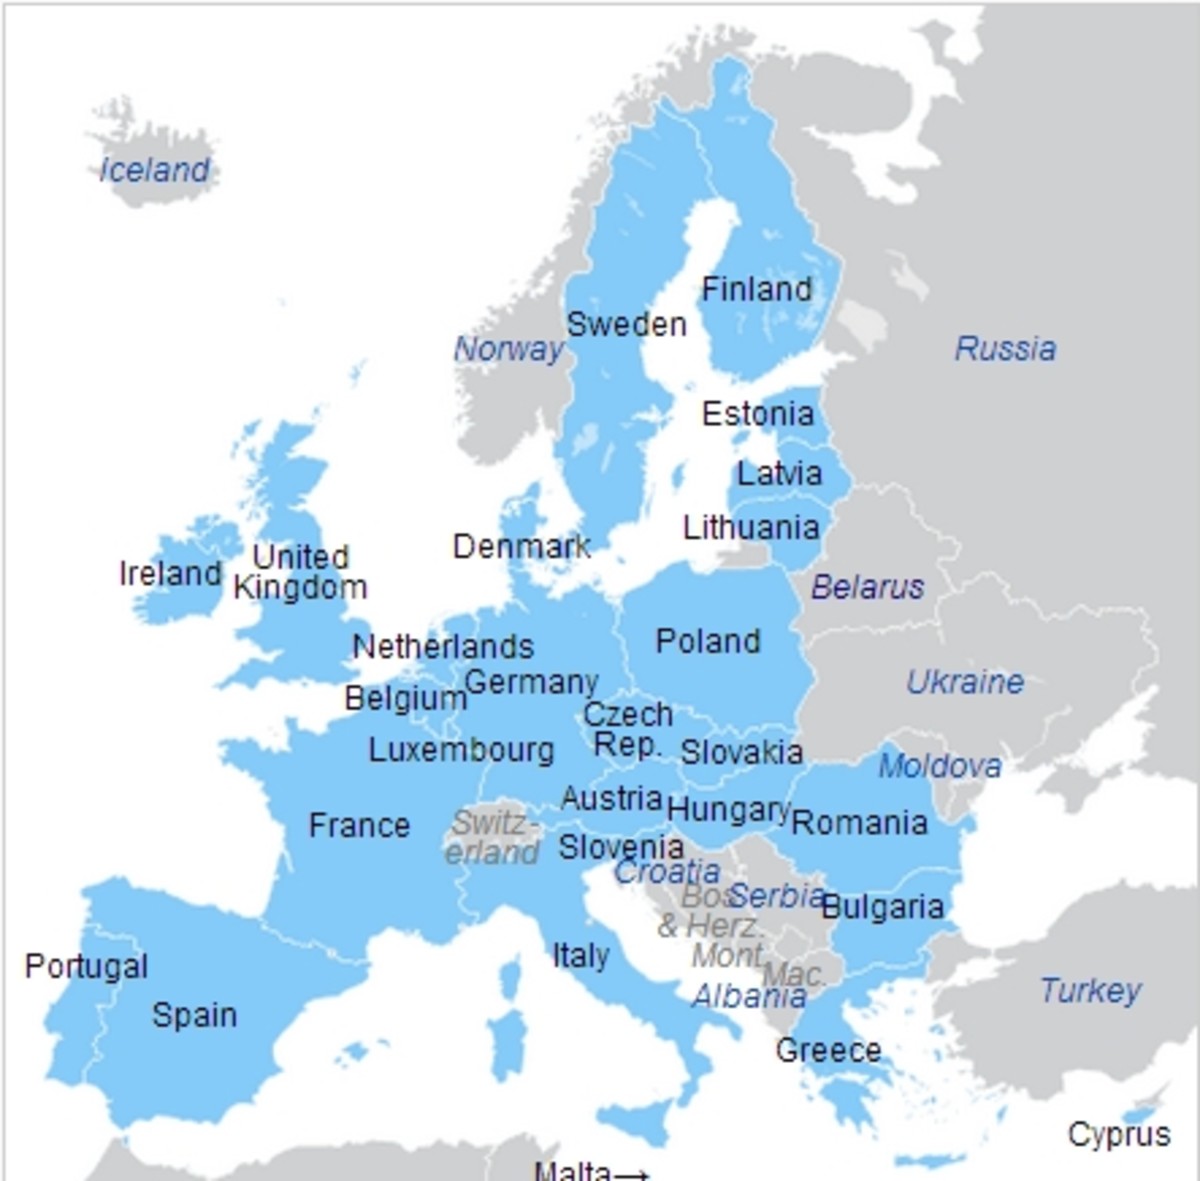 European Union member states in blue.